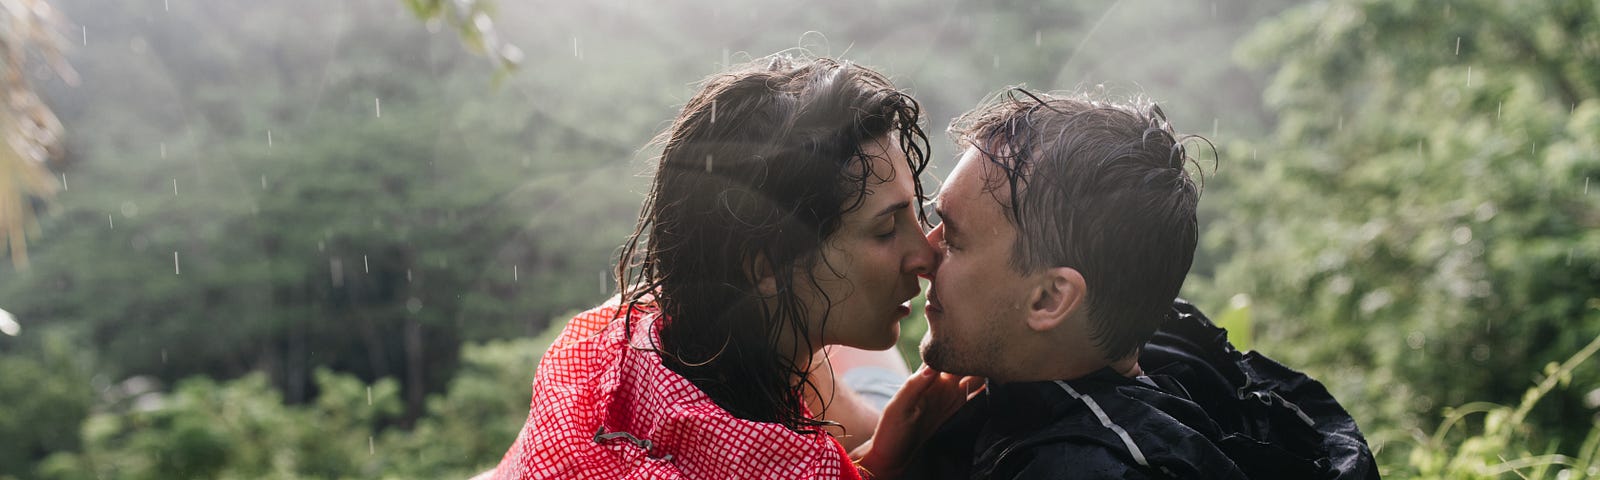 A couple lovingly embraces in a rainstorm.